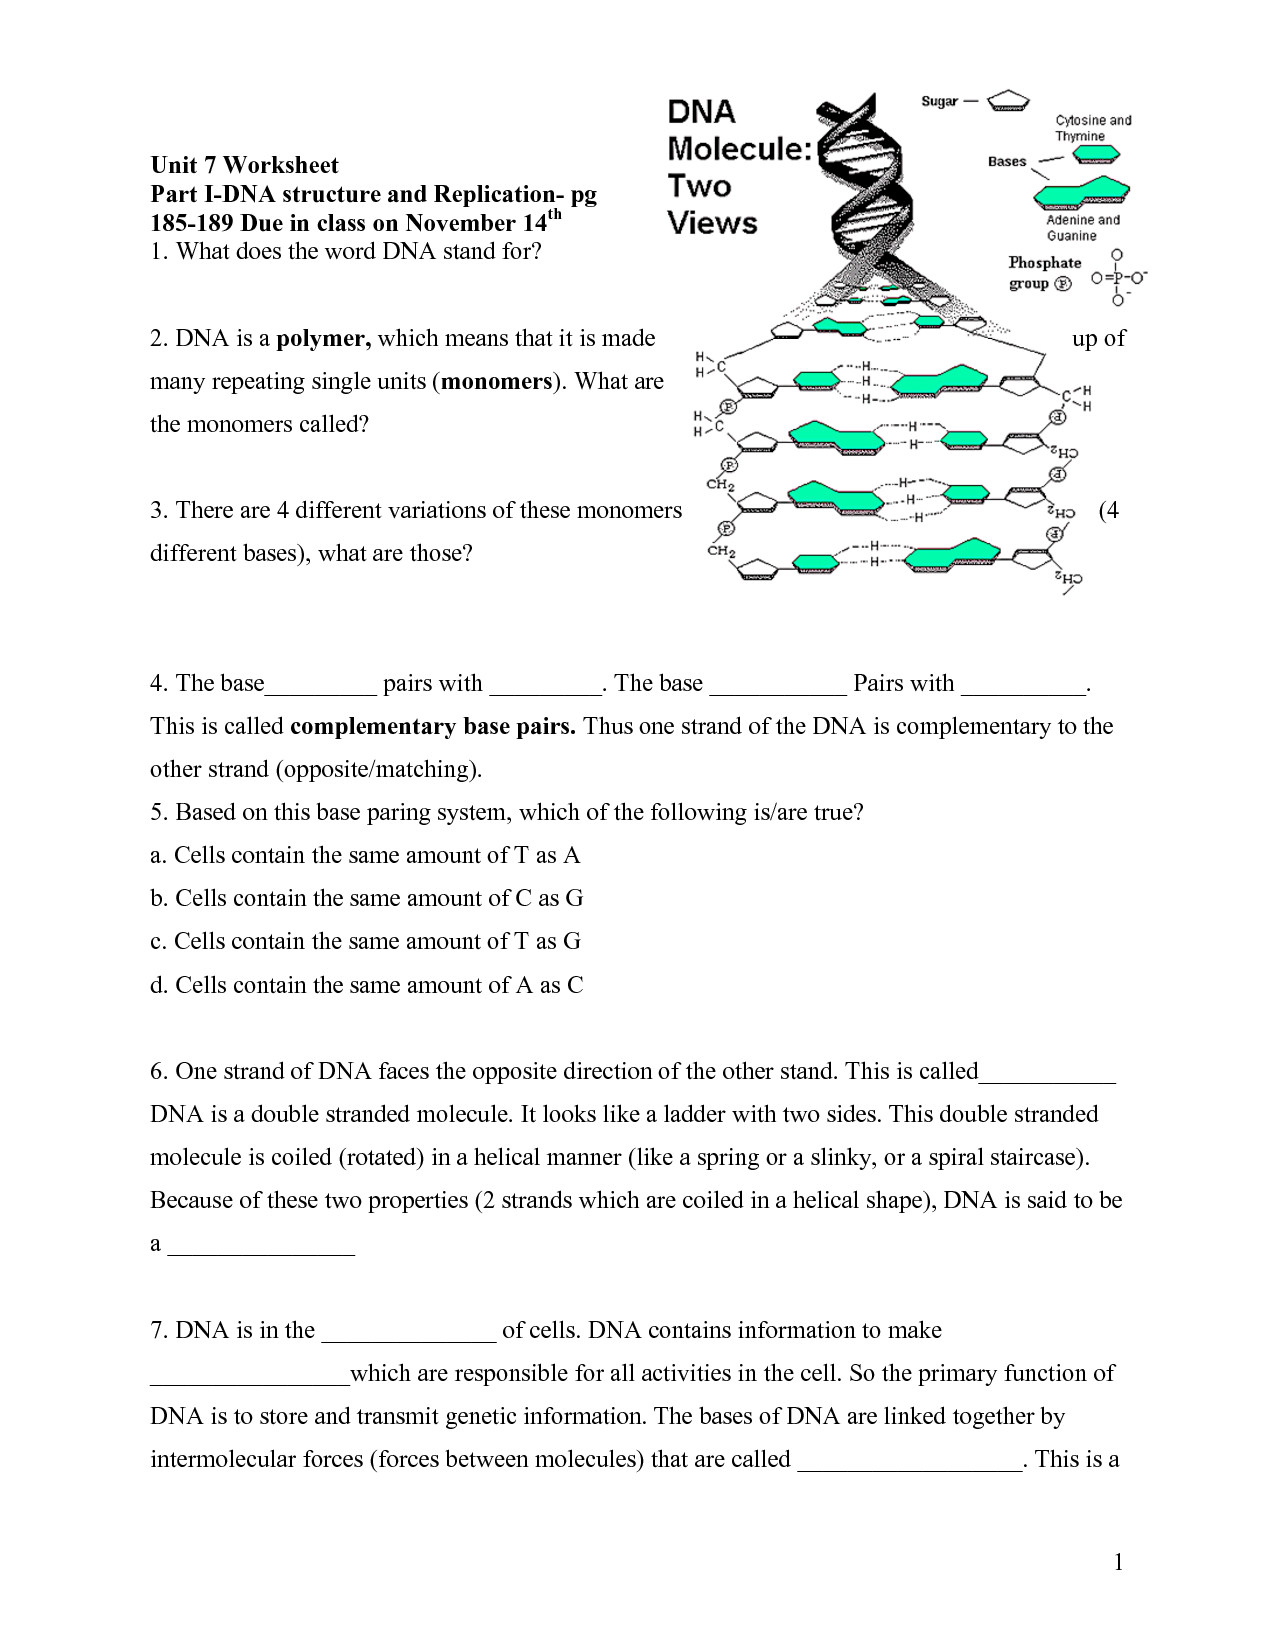 DNA Structure Worksheet Answer Key Image